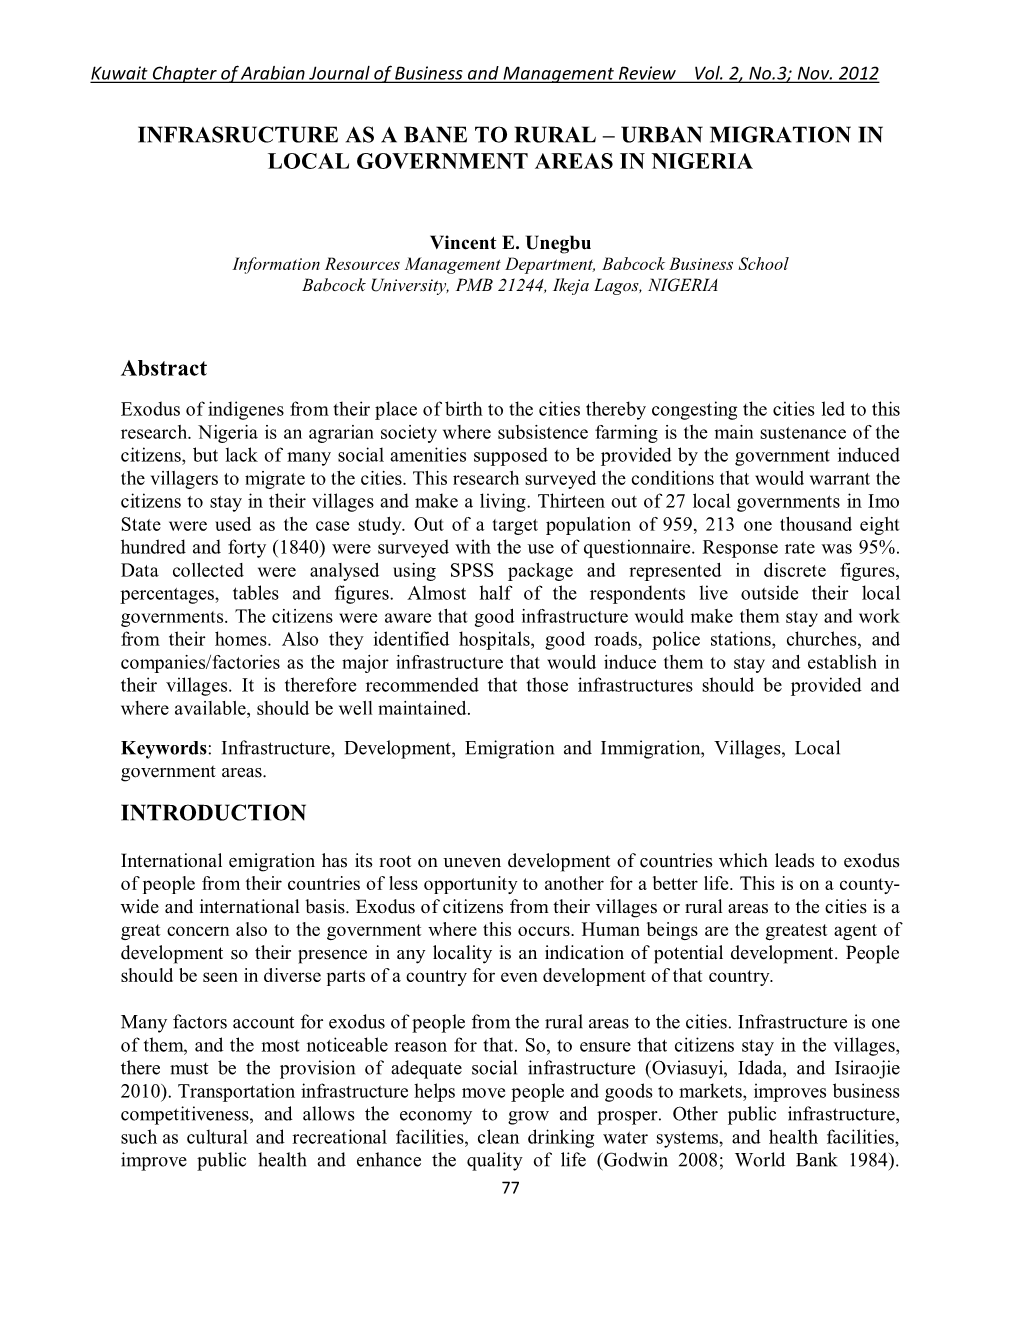 Urban Migration in Local Government Areas in Nigeria